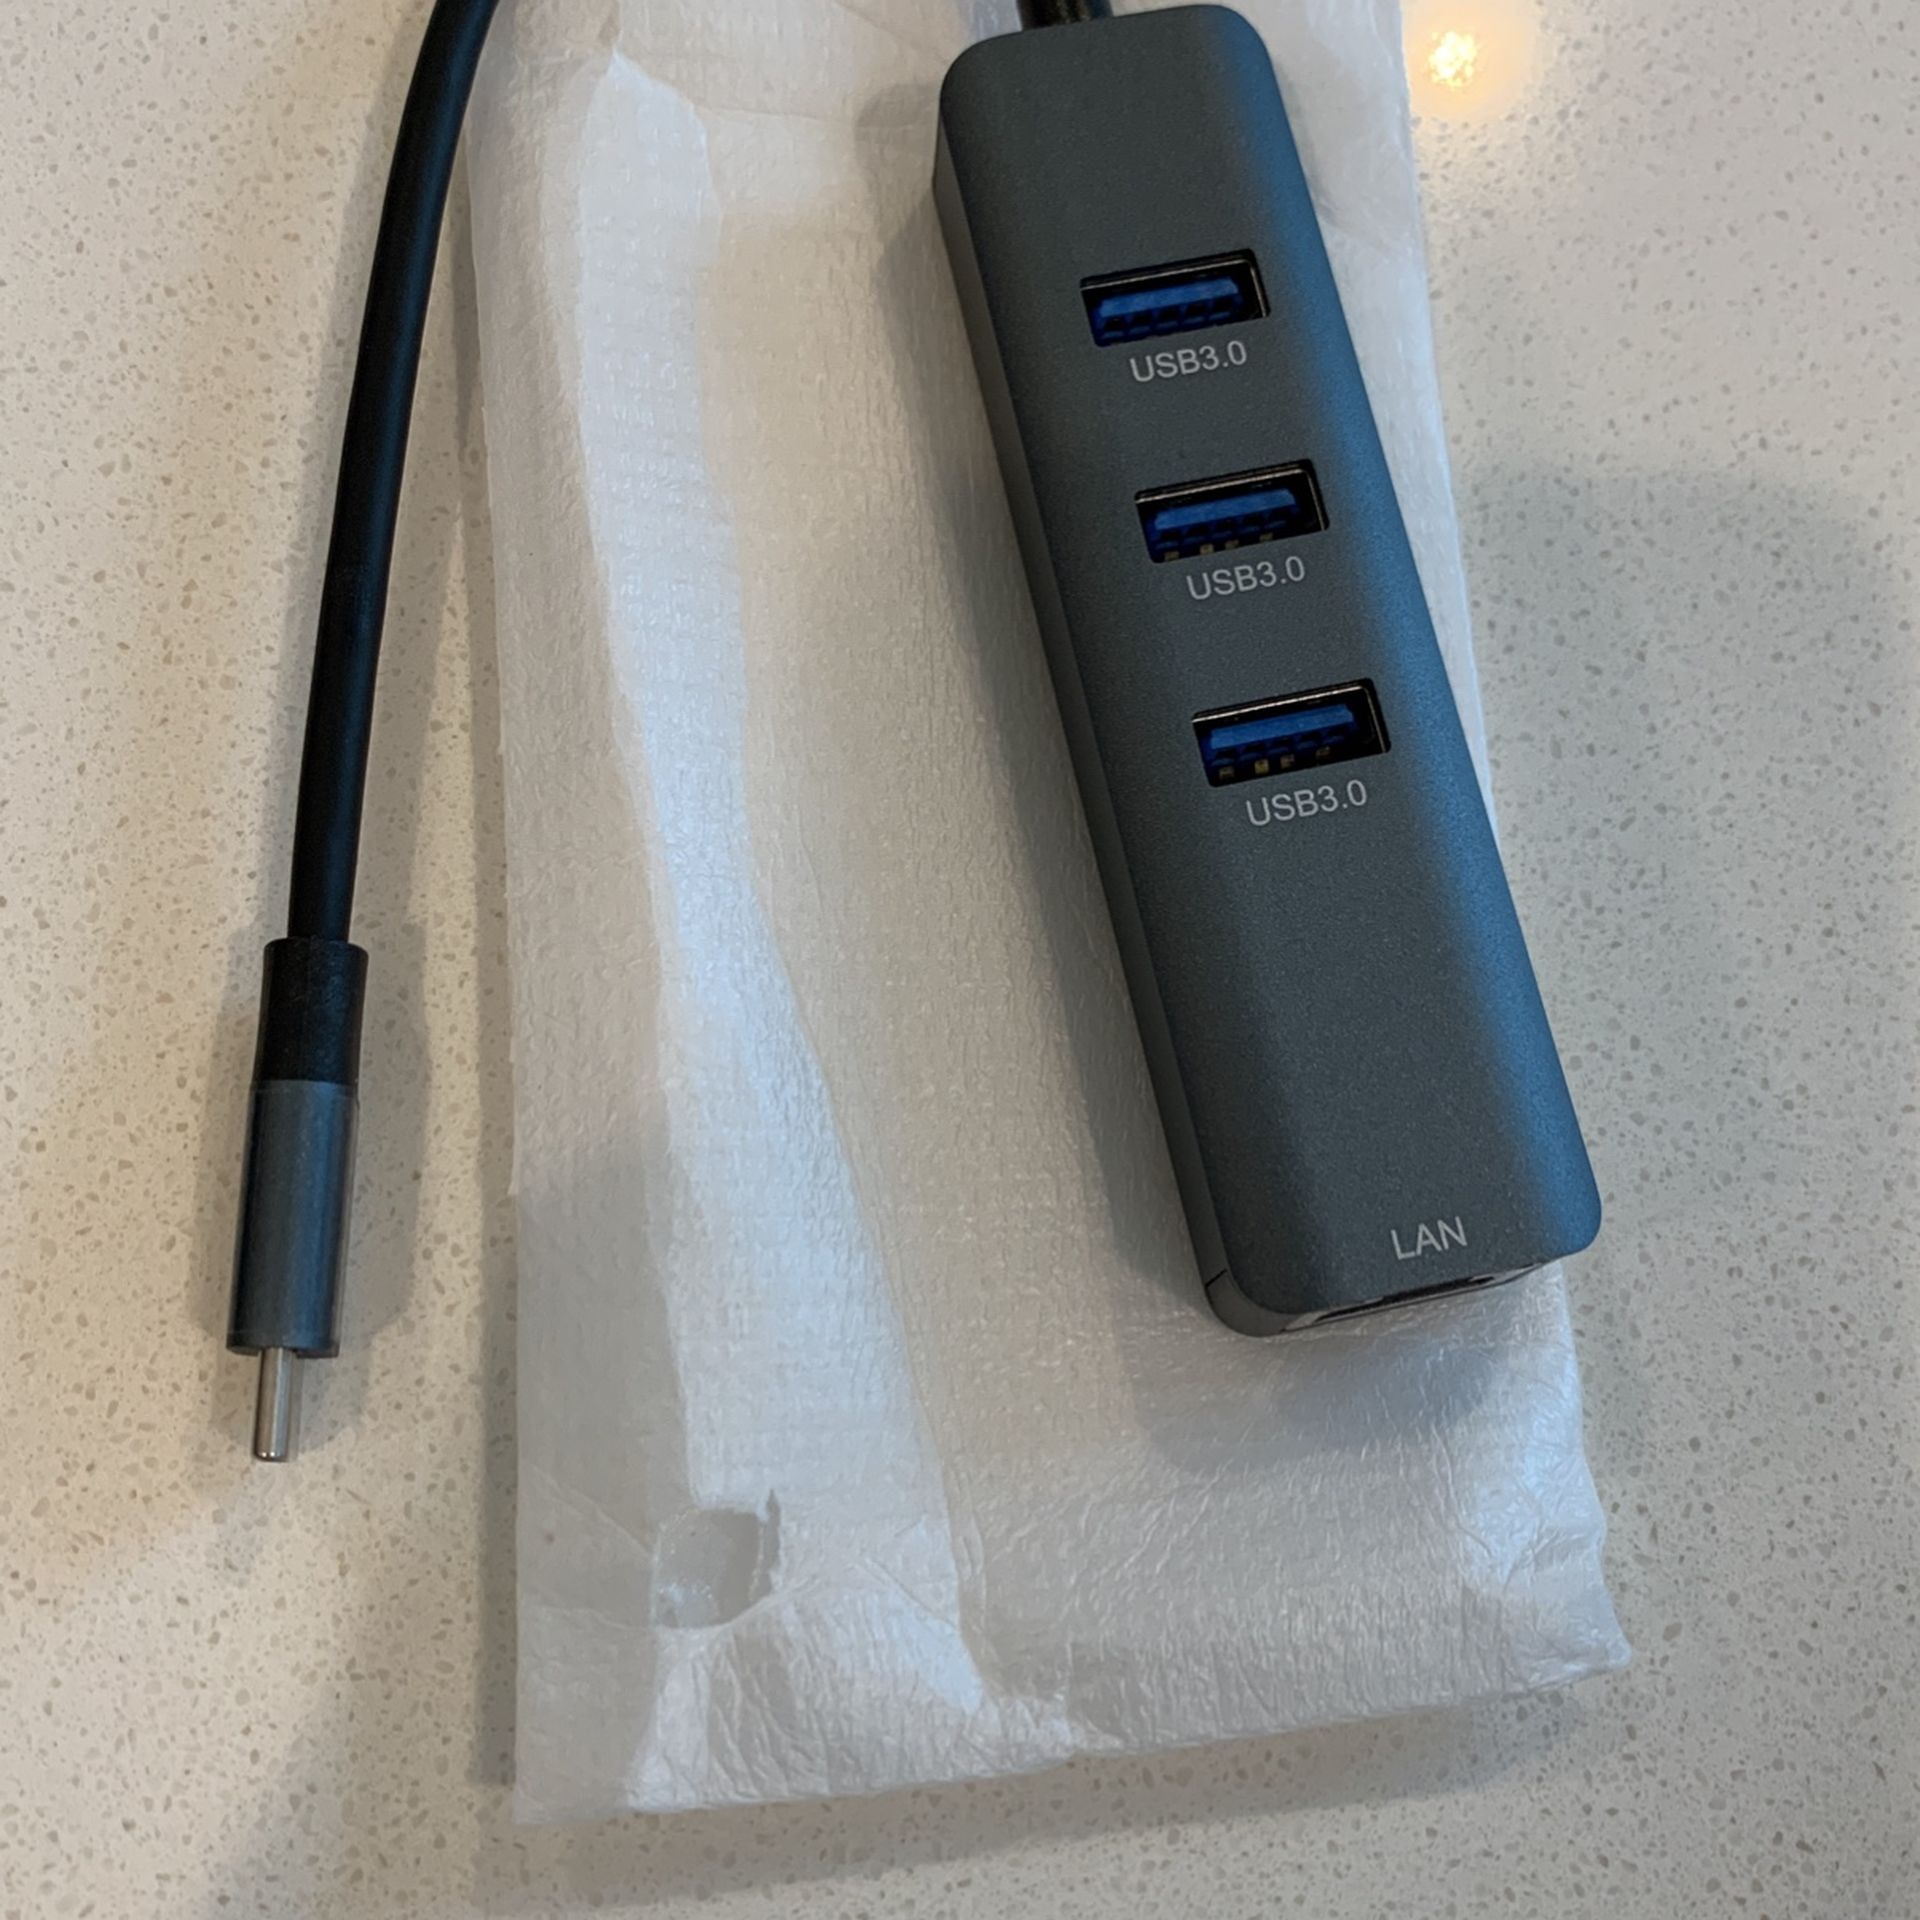 USB 3.0 4-in-1 Adapter For Macbook